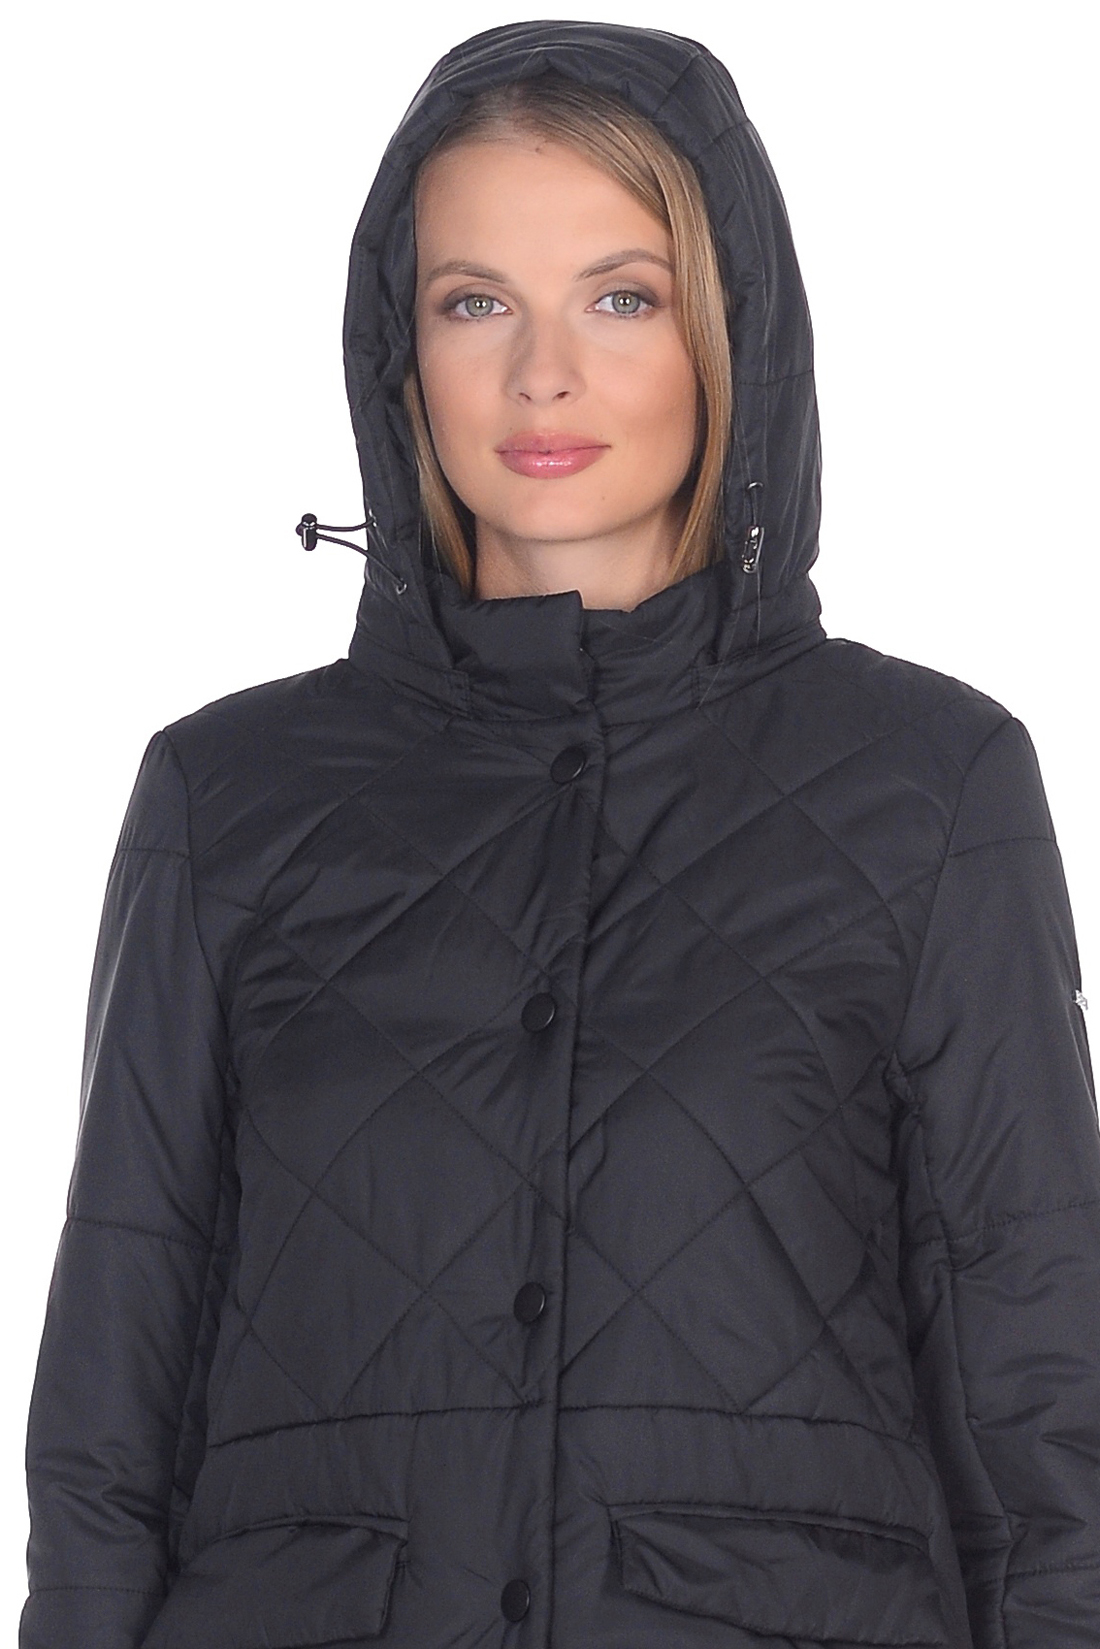 Удлинённая прямая куртка (арт. baon B039033), размер 3XL, цвет черный Удлинённая прямая куртка (арт. baon B039033) - фото 3